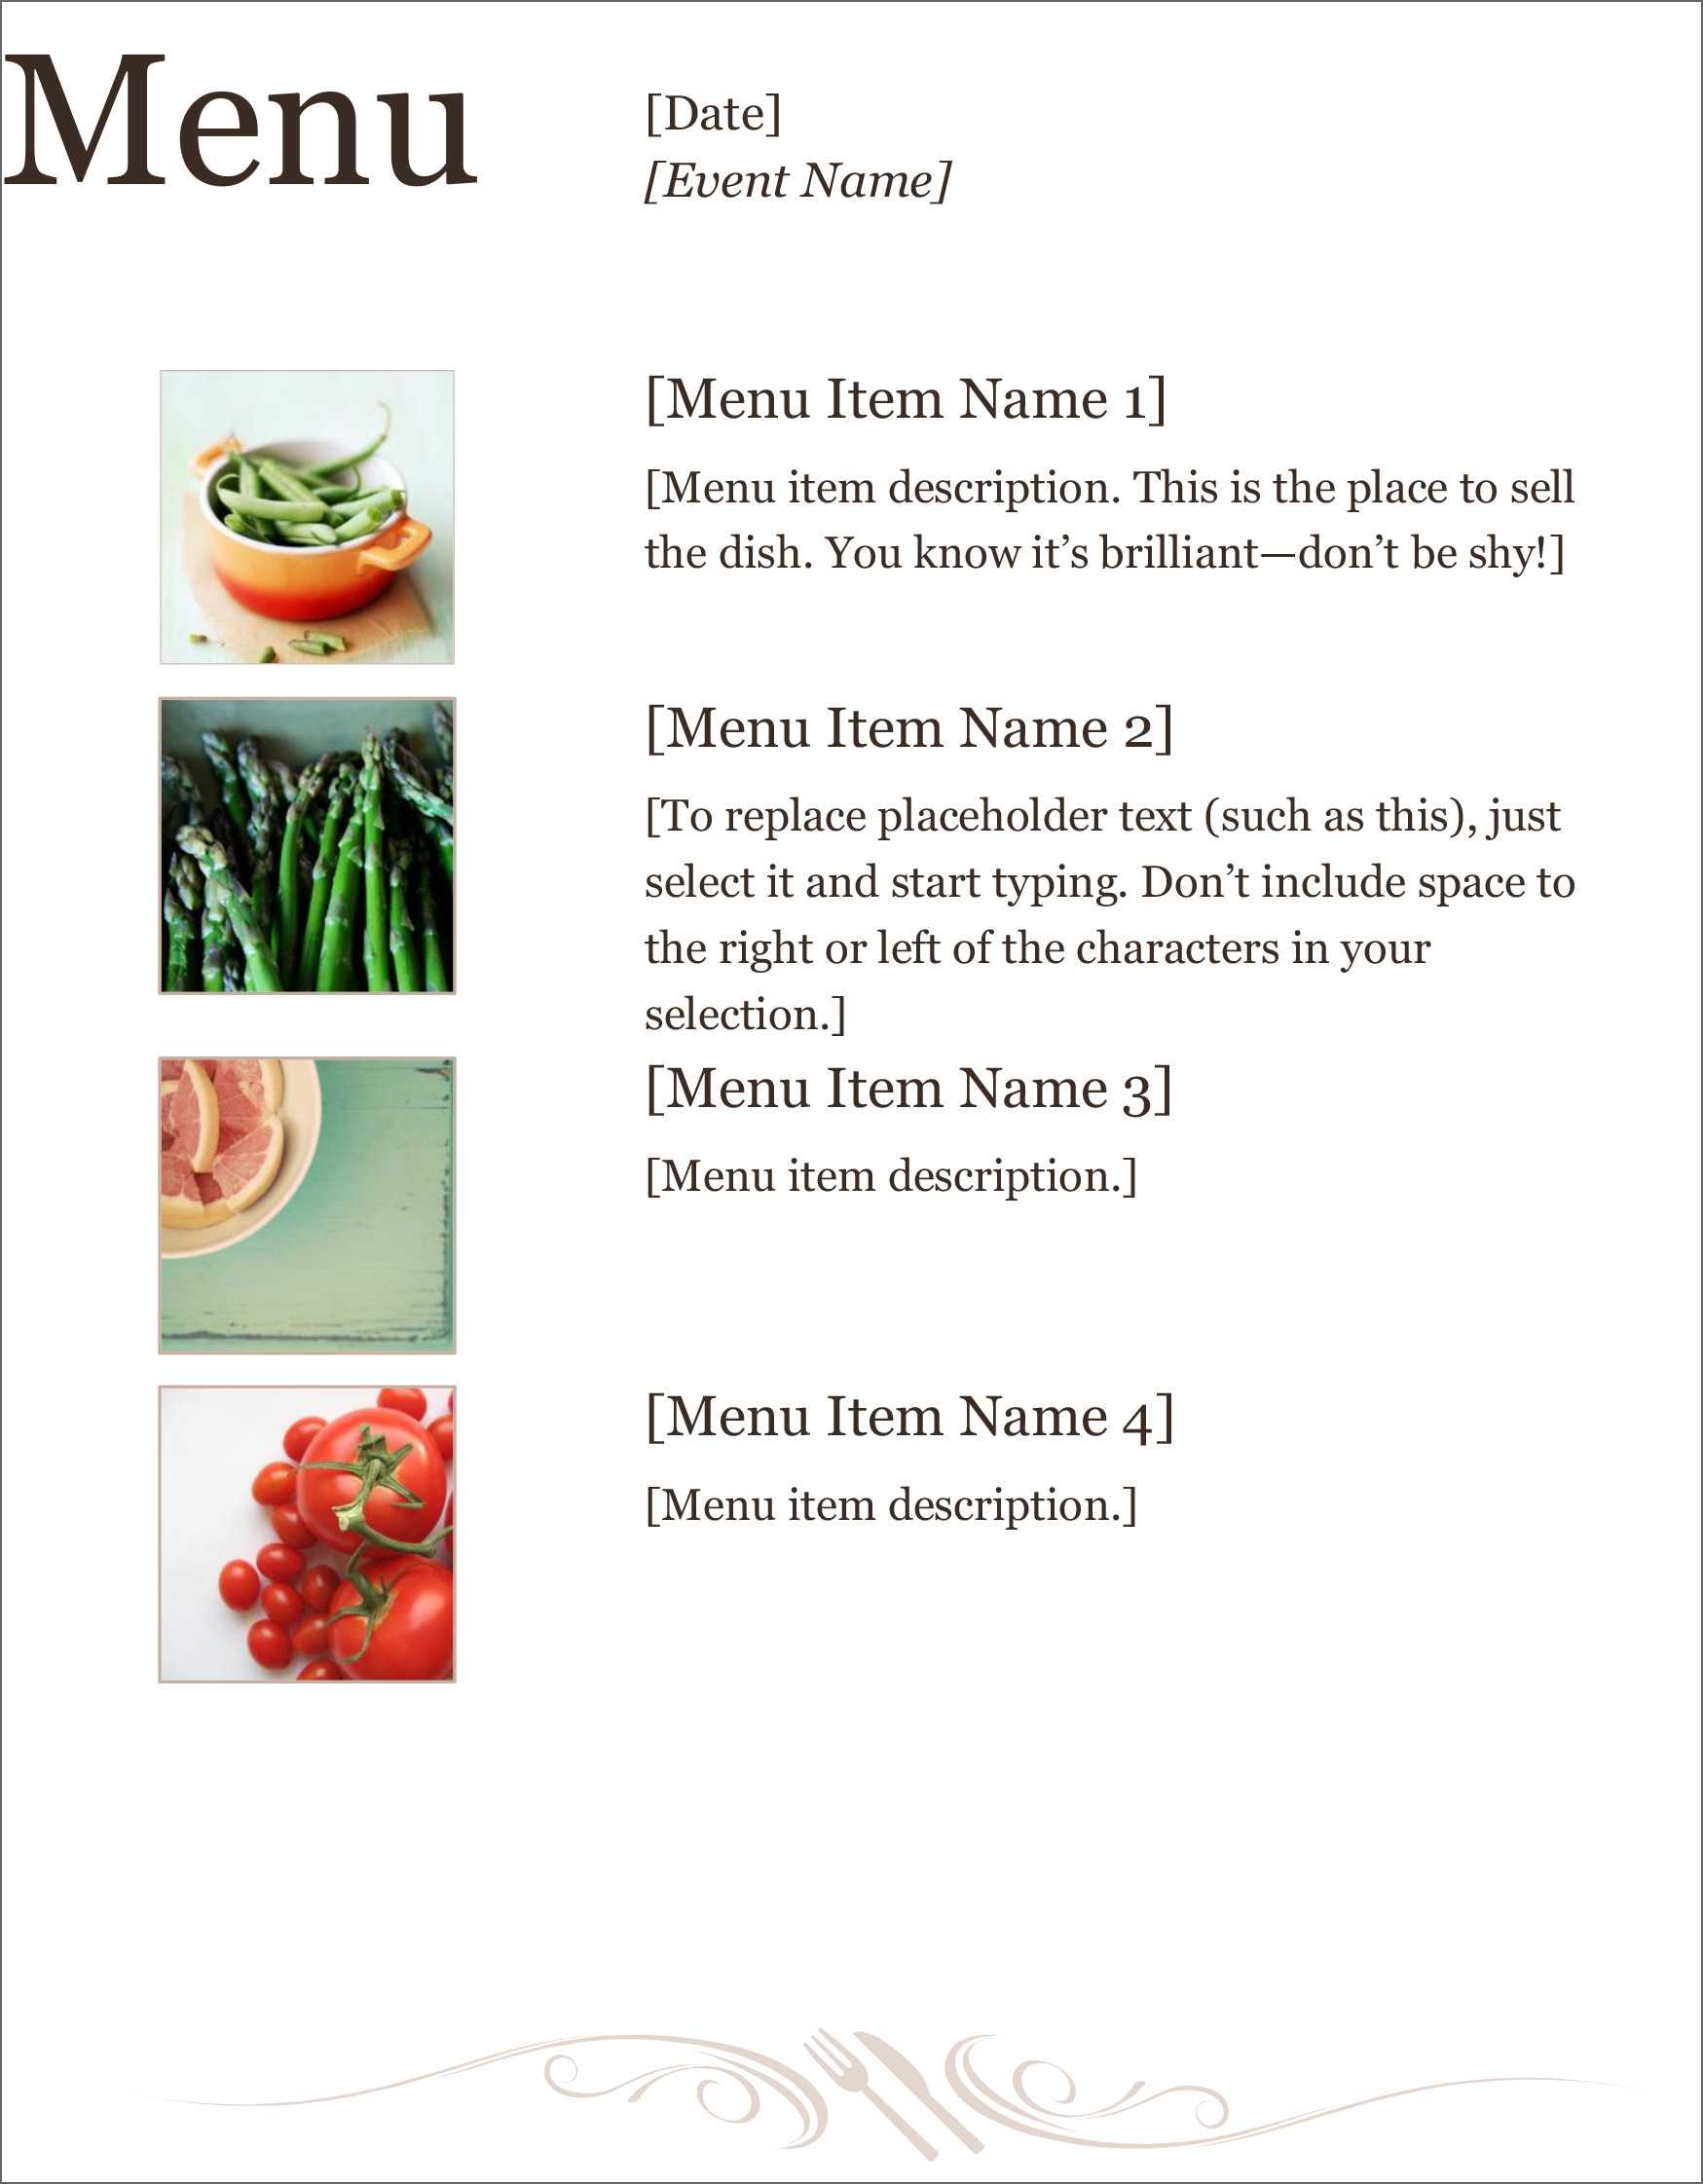 32 Free Simple Menu Templates For Restaurants, Cafes, And Intended For Free Cafe Menu Templates For Word